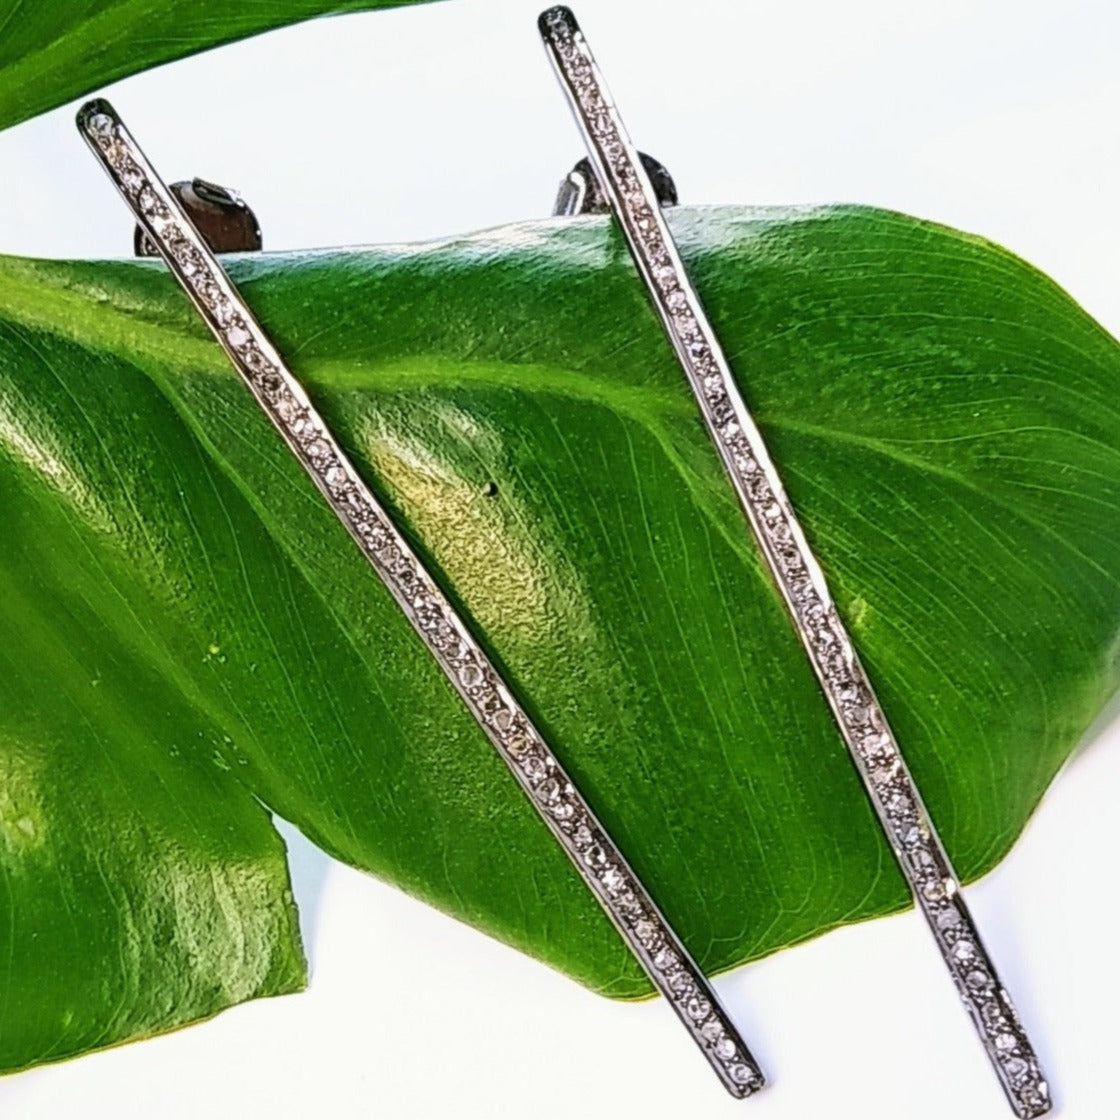 "Chop Sticks" 2.75" Earrings - 'Raw' Diamonds, Oxidized Sterling